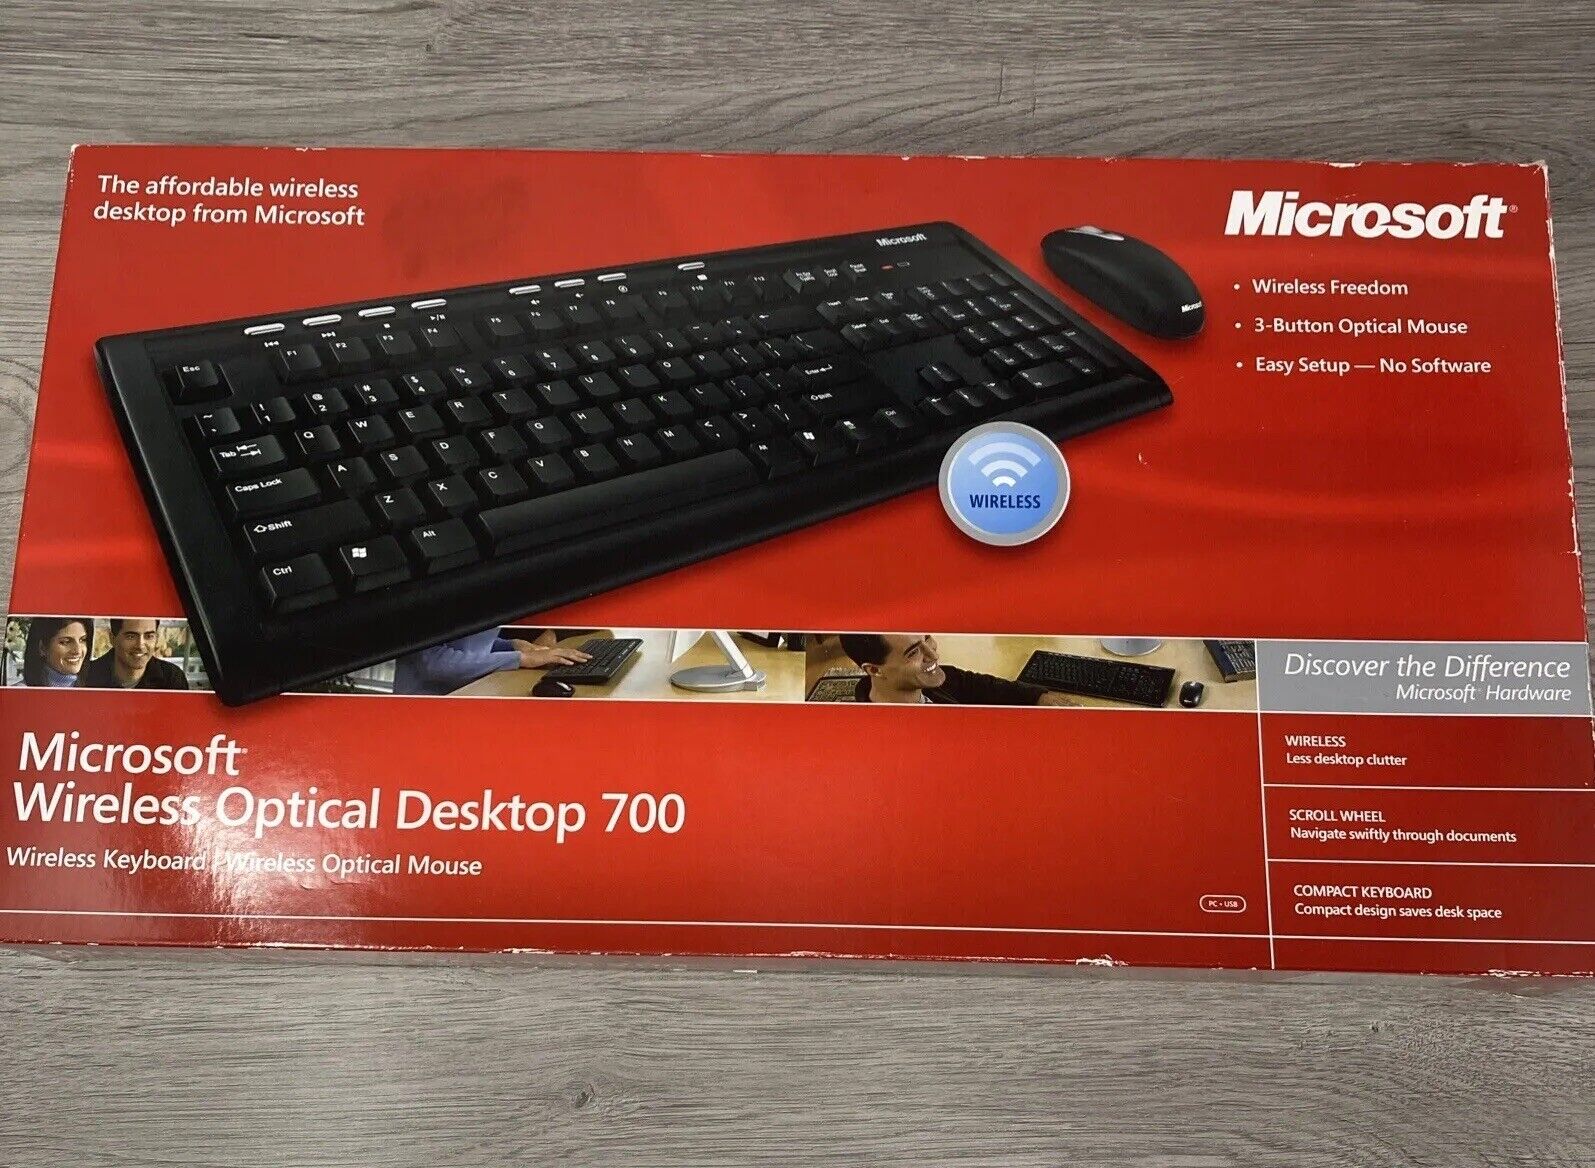 Microsoft Wireless Optical Desktop 700 Wireless Keyboard Wireless Optical Mouse